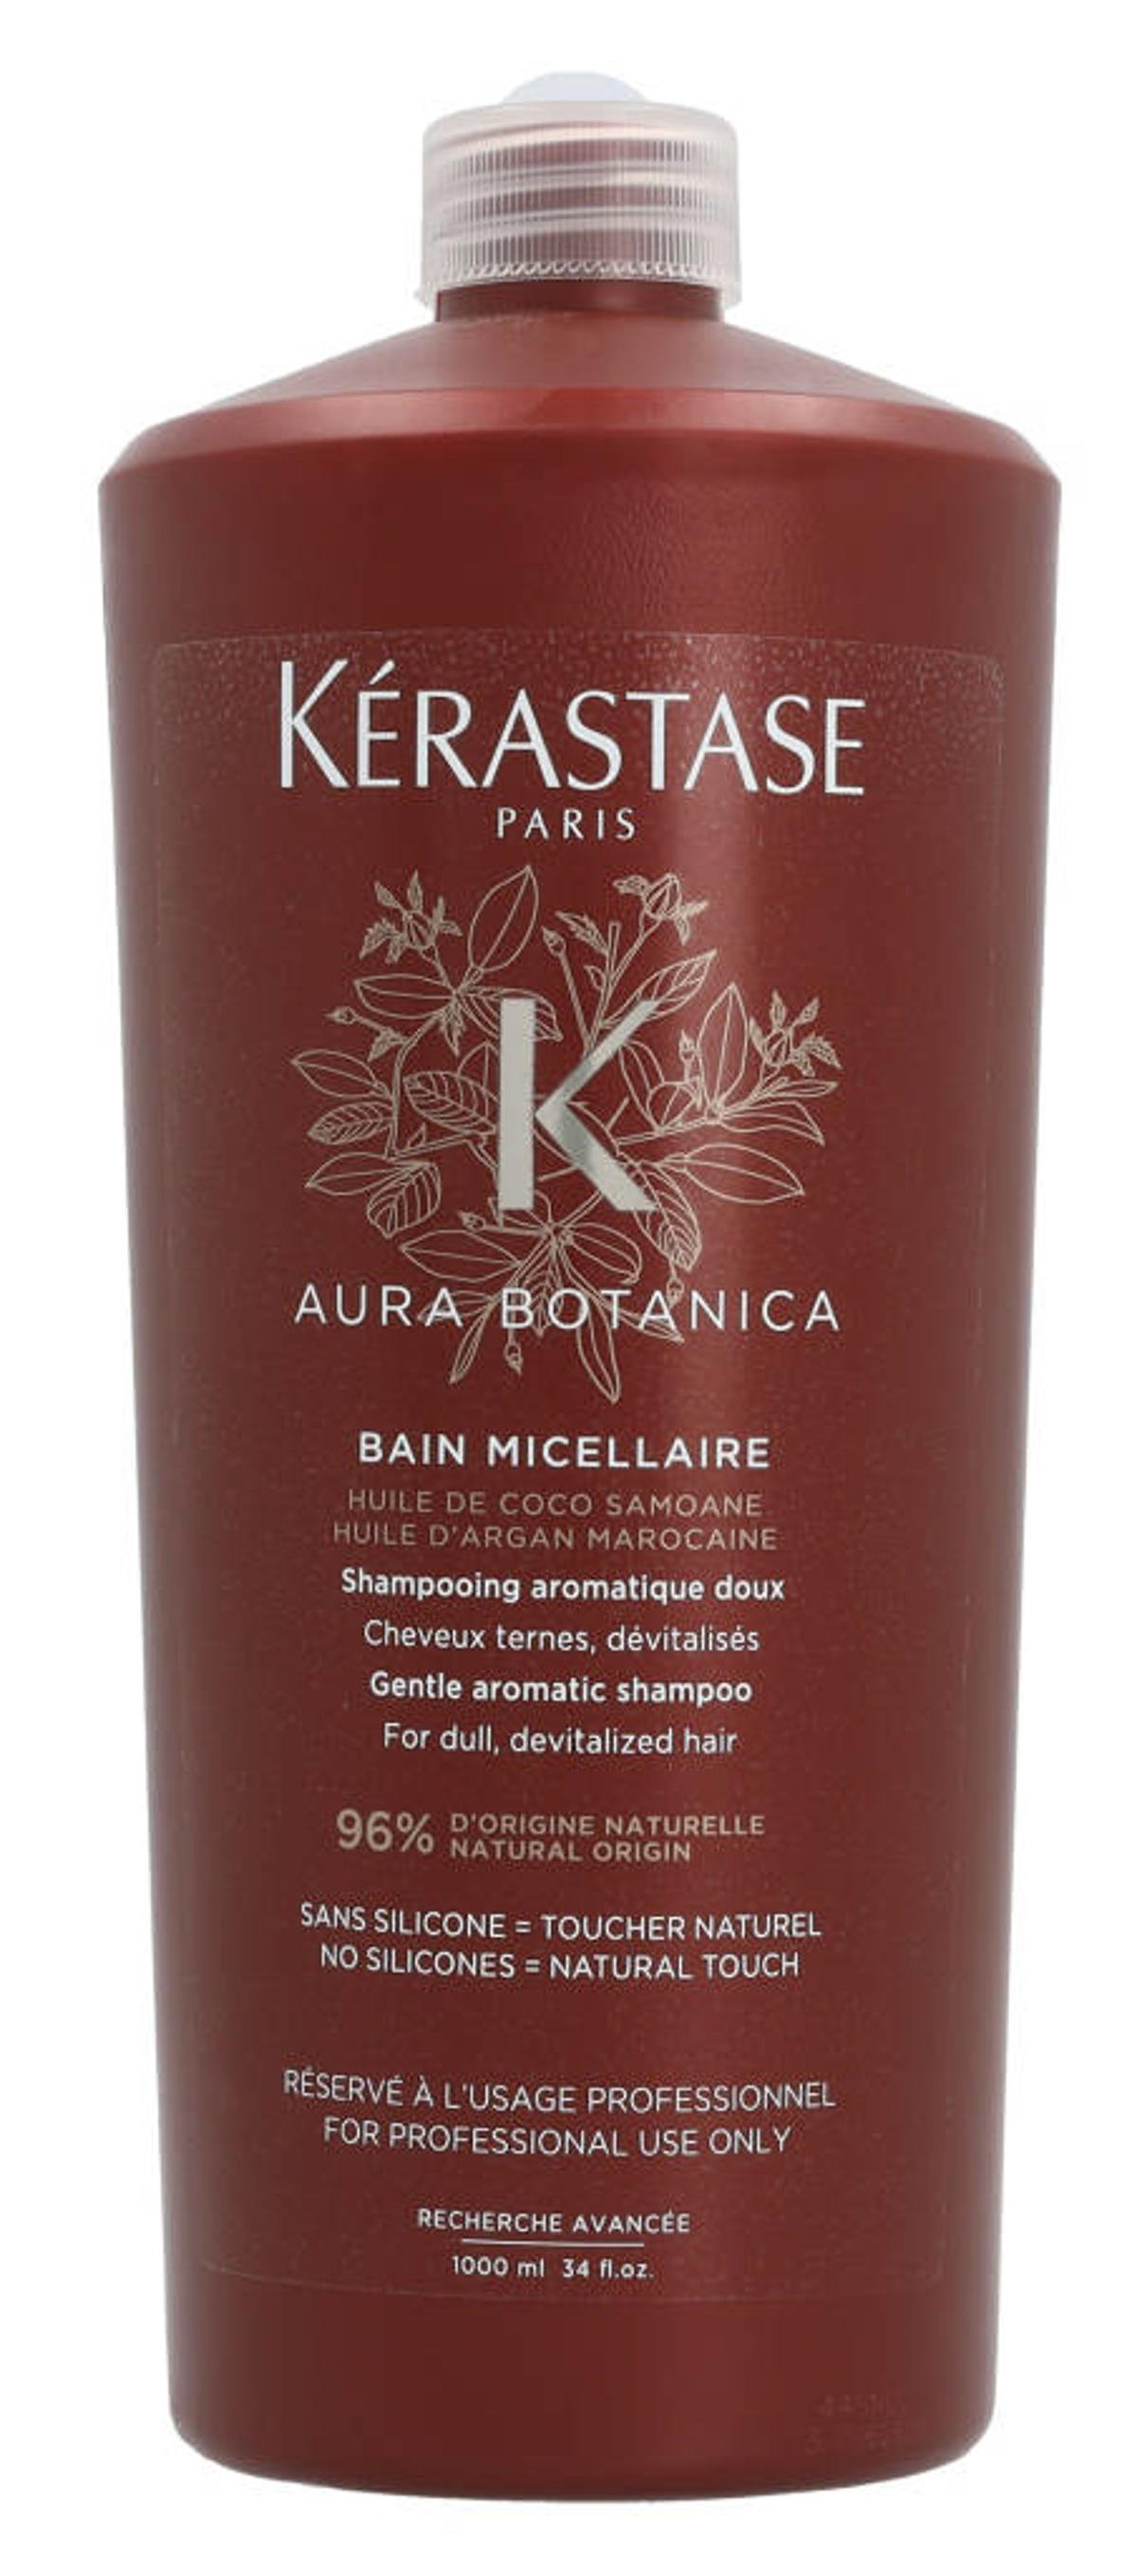 Aura Botanica Bain Micellaire shampoo - 1000 ml | wehkamp